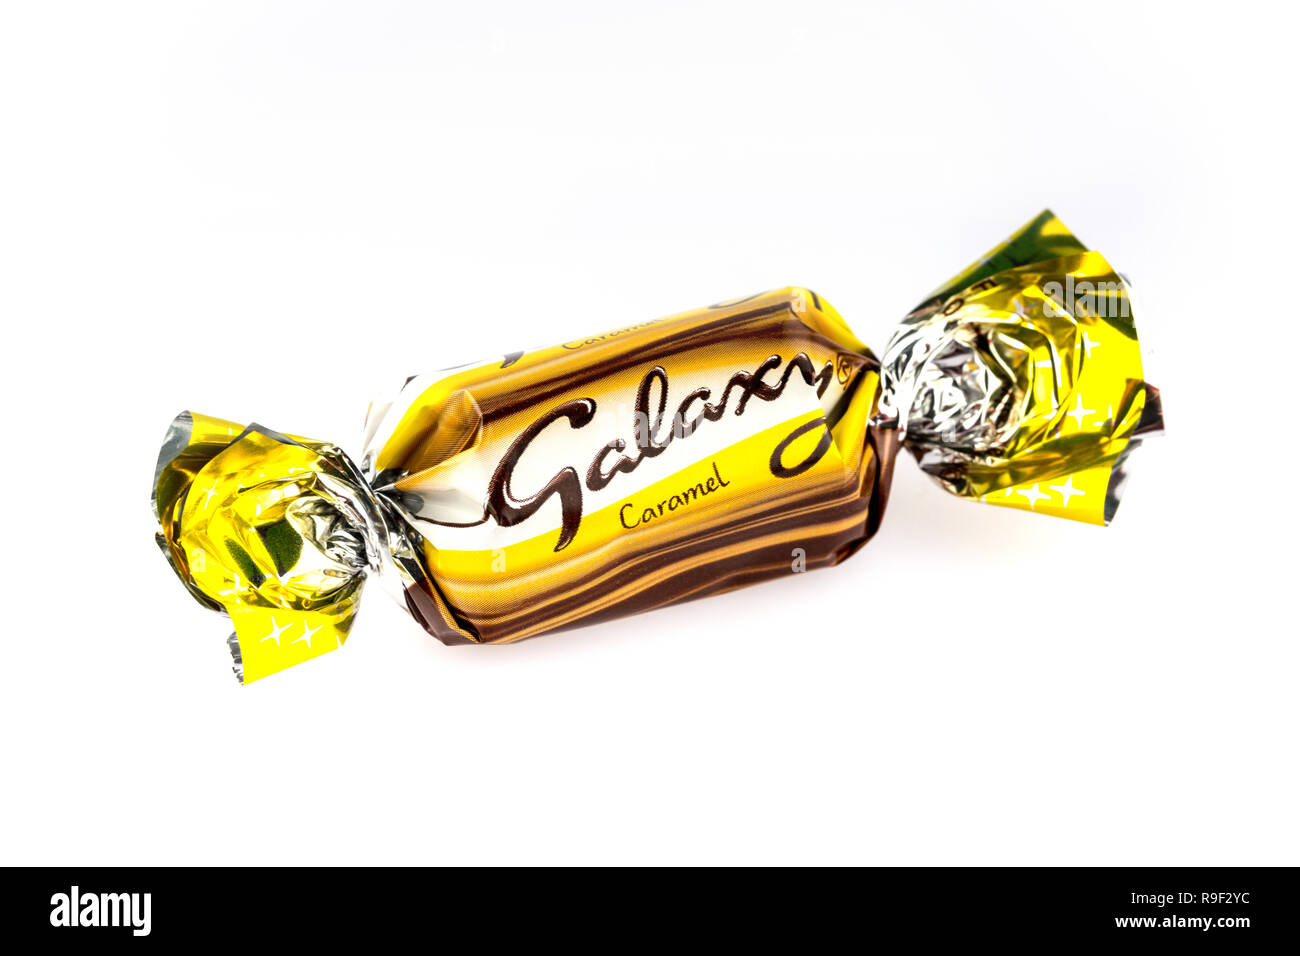 Galaxy Caramel Celebrations Chocolate on a white background Stock Photo